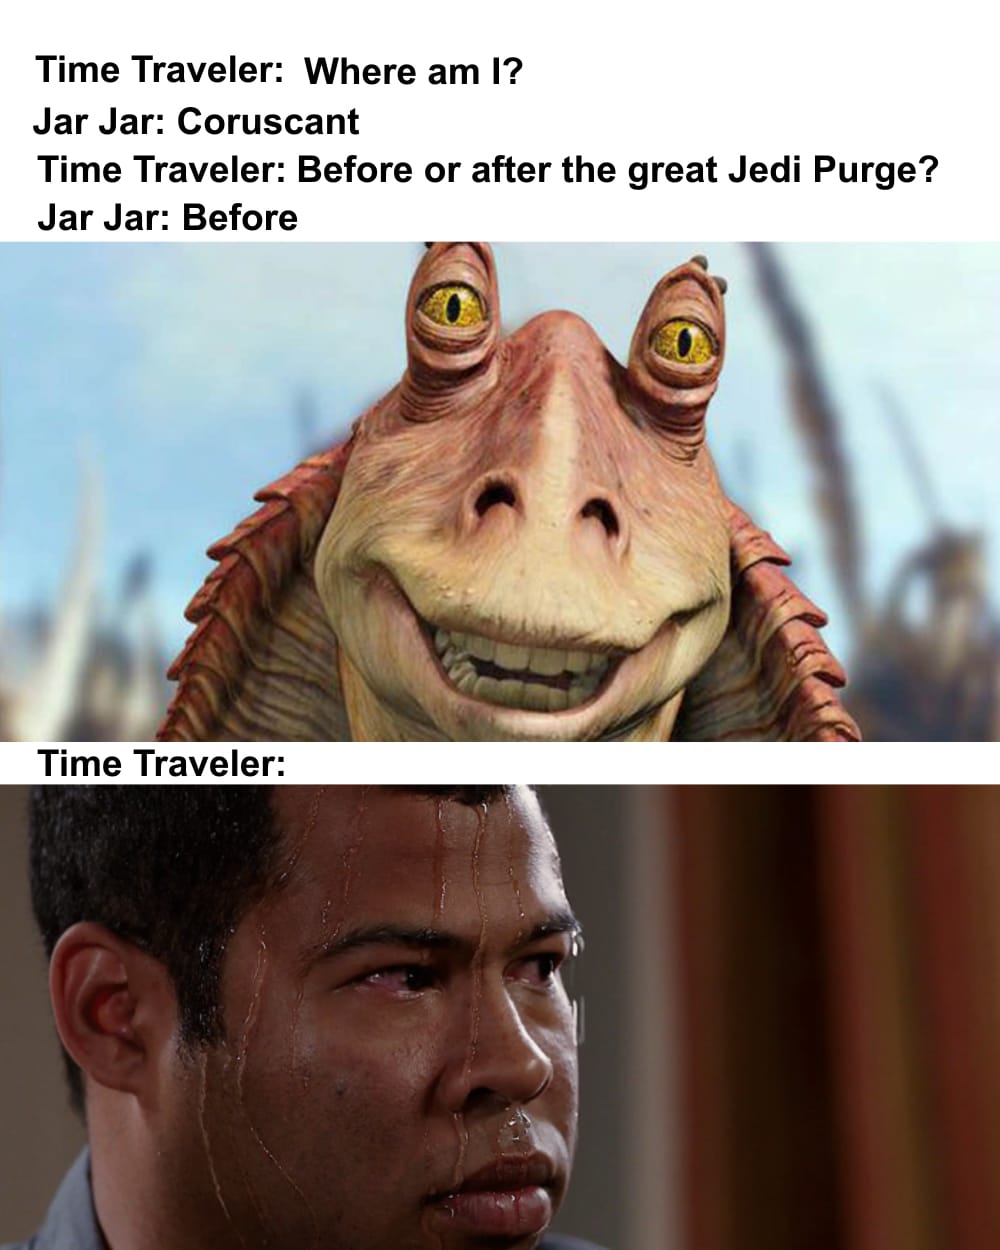 jar-jar-binks star-wars-memes jar-jar-binks text: Time Traveler: Where am I? Jar Jar: Coruscant Time Traveler: Before or after the great Jedi Purge? Jar Jar: Before Time Traveler: 